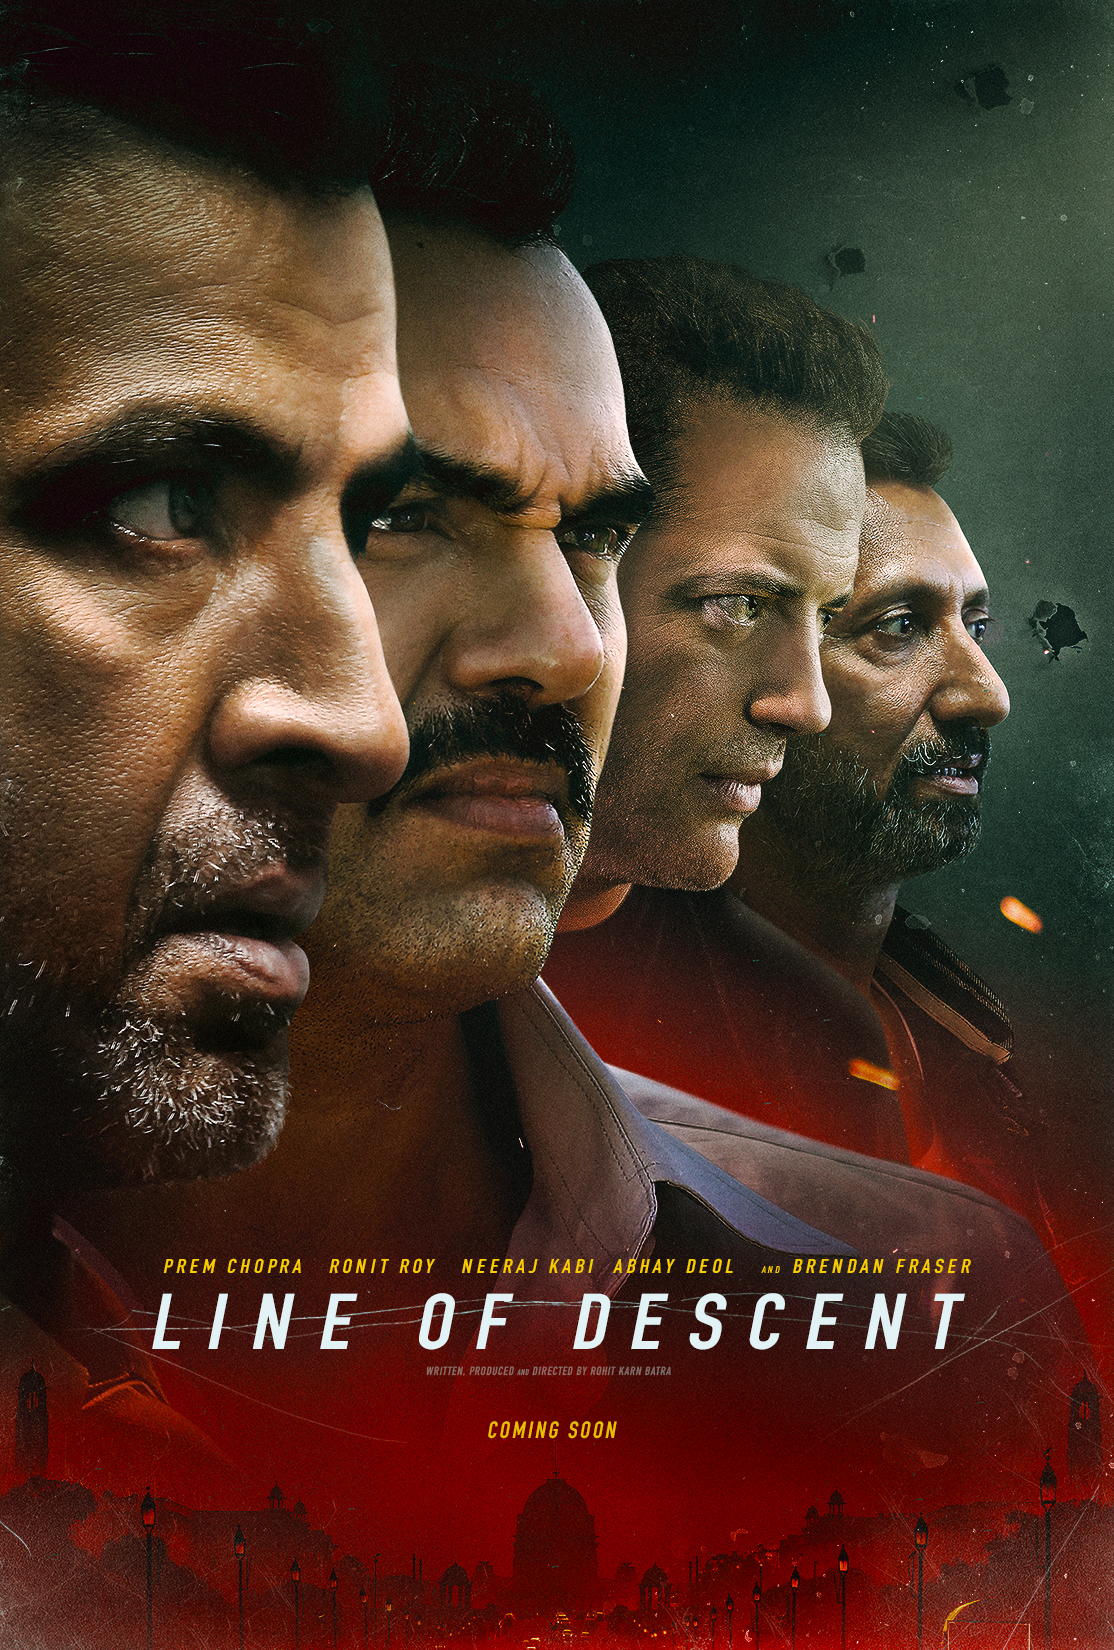 Line of Descent 2019 Hindi Movie 1080p HDRip Watch Online